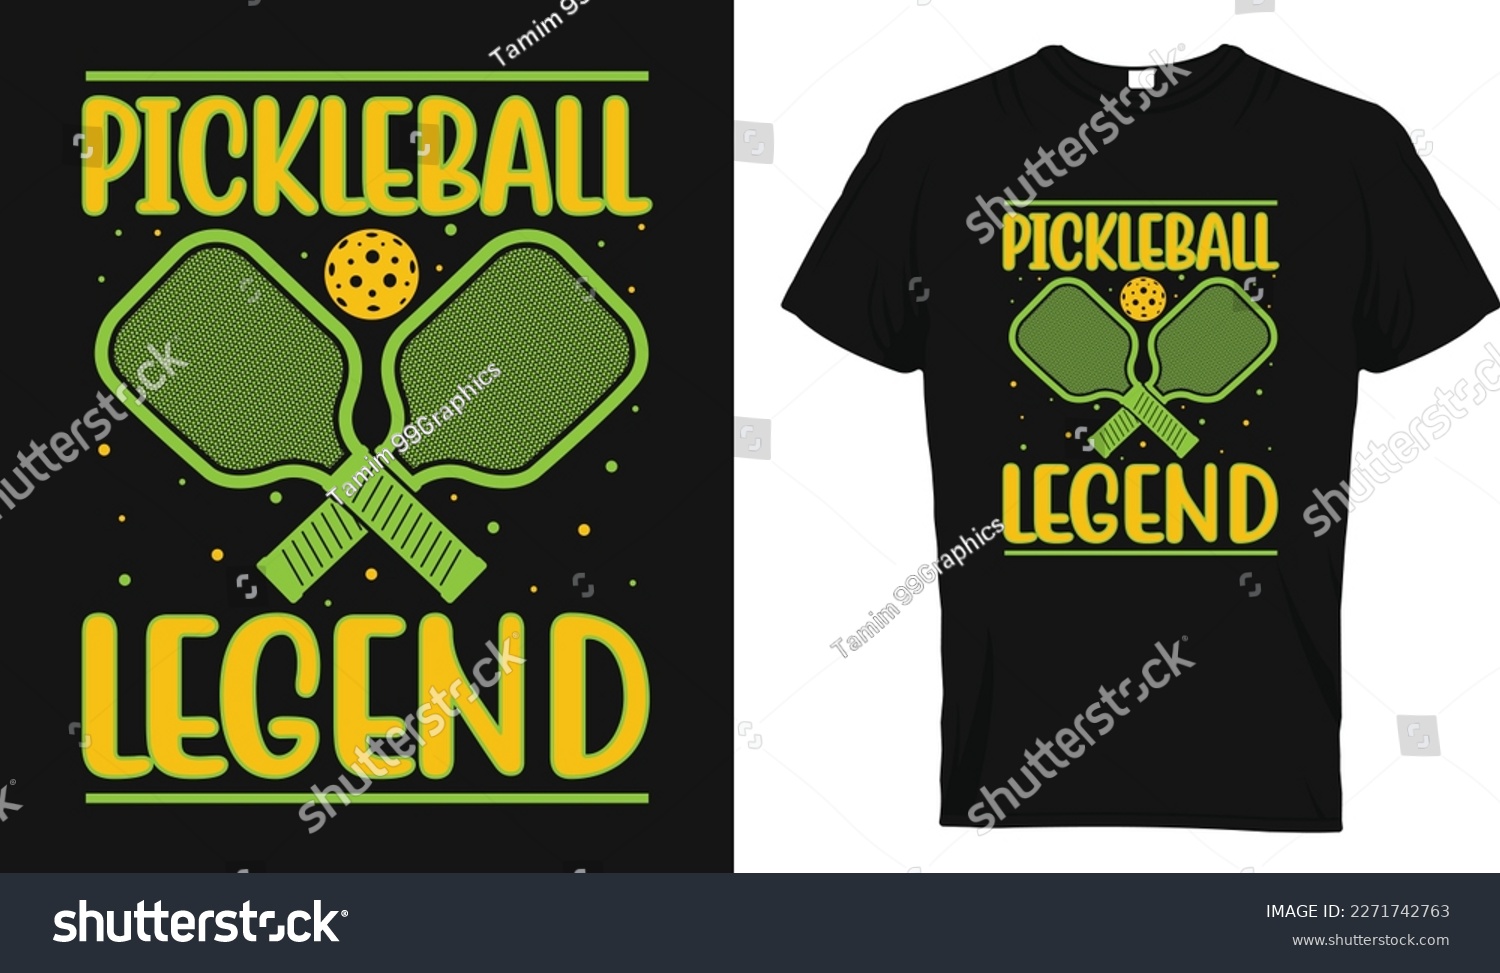 SVG of Pickleball legend t shirt design.
Pickleball legend SVG design.
Pickleball t shirt design. svg